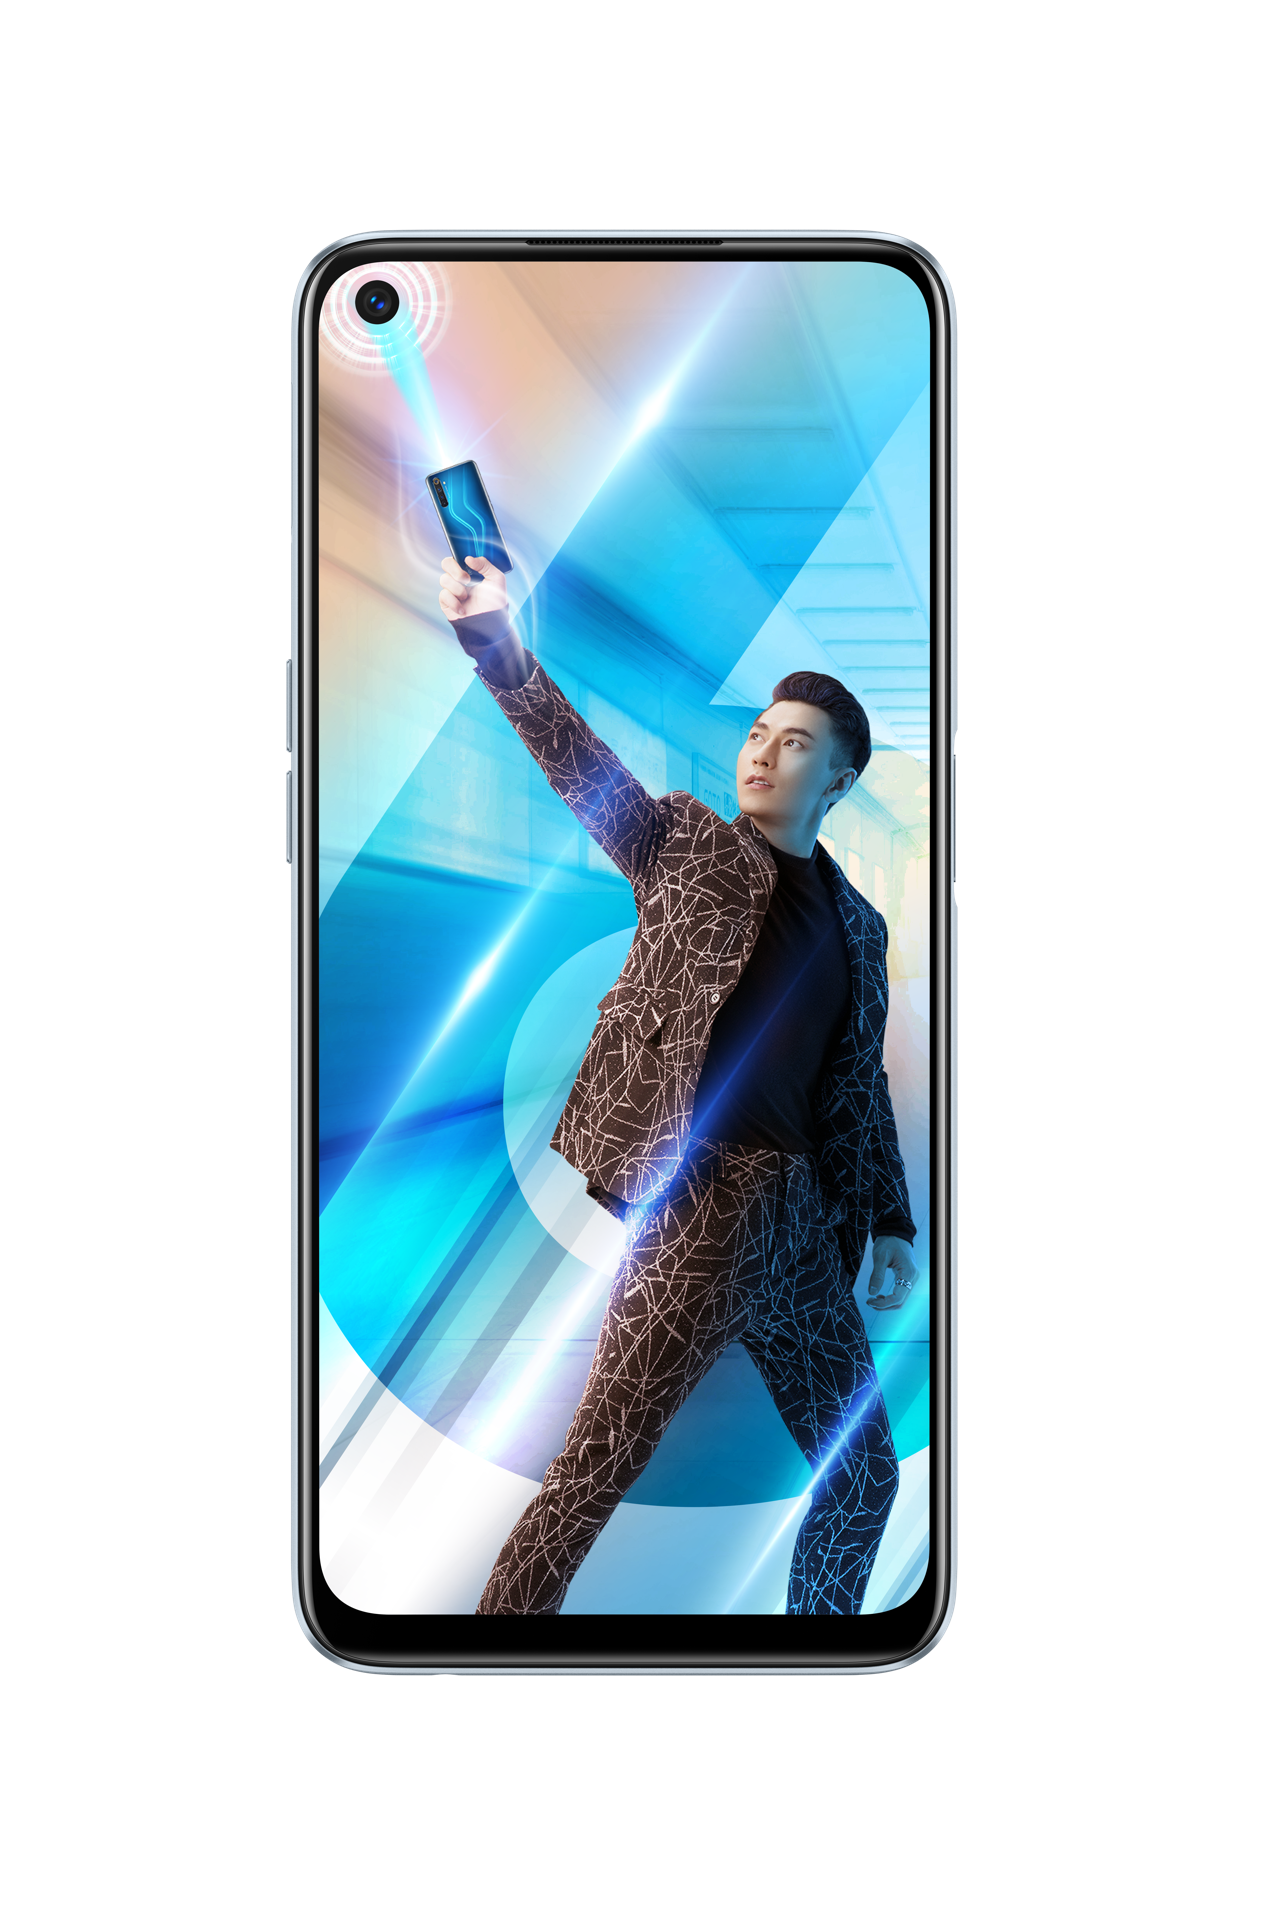 TOP 50 Hình nền Samsung Galaxy S21 đẹp nhất mới nhất 2021 11  Android  wallpaper blue Stock wallpaper Samsung wallpaper